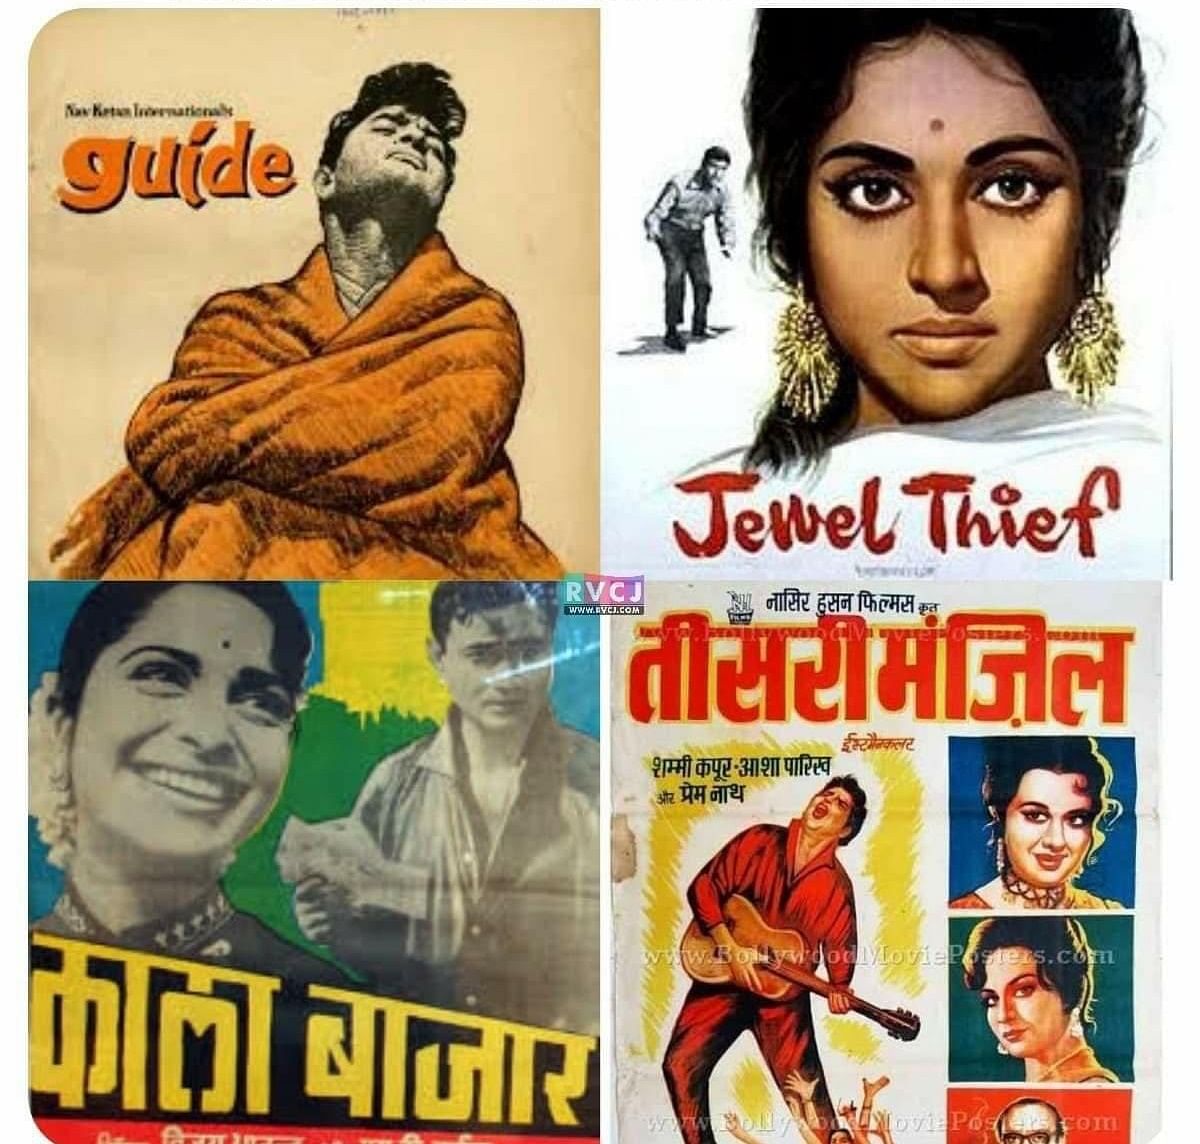 He made classics such as ‘Guide’, ‘Jewel Thief’, ‘Kaala Bazar’, and ‘Teesri Manzil’. TWITTER/RVCJ